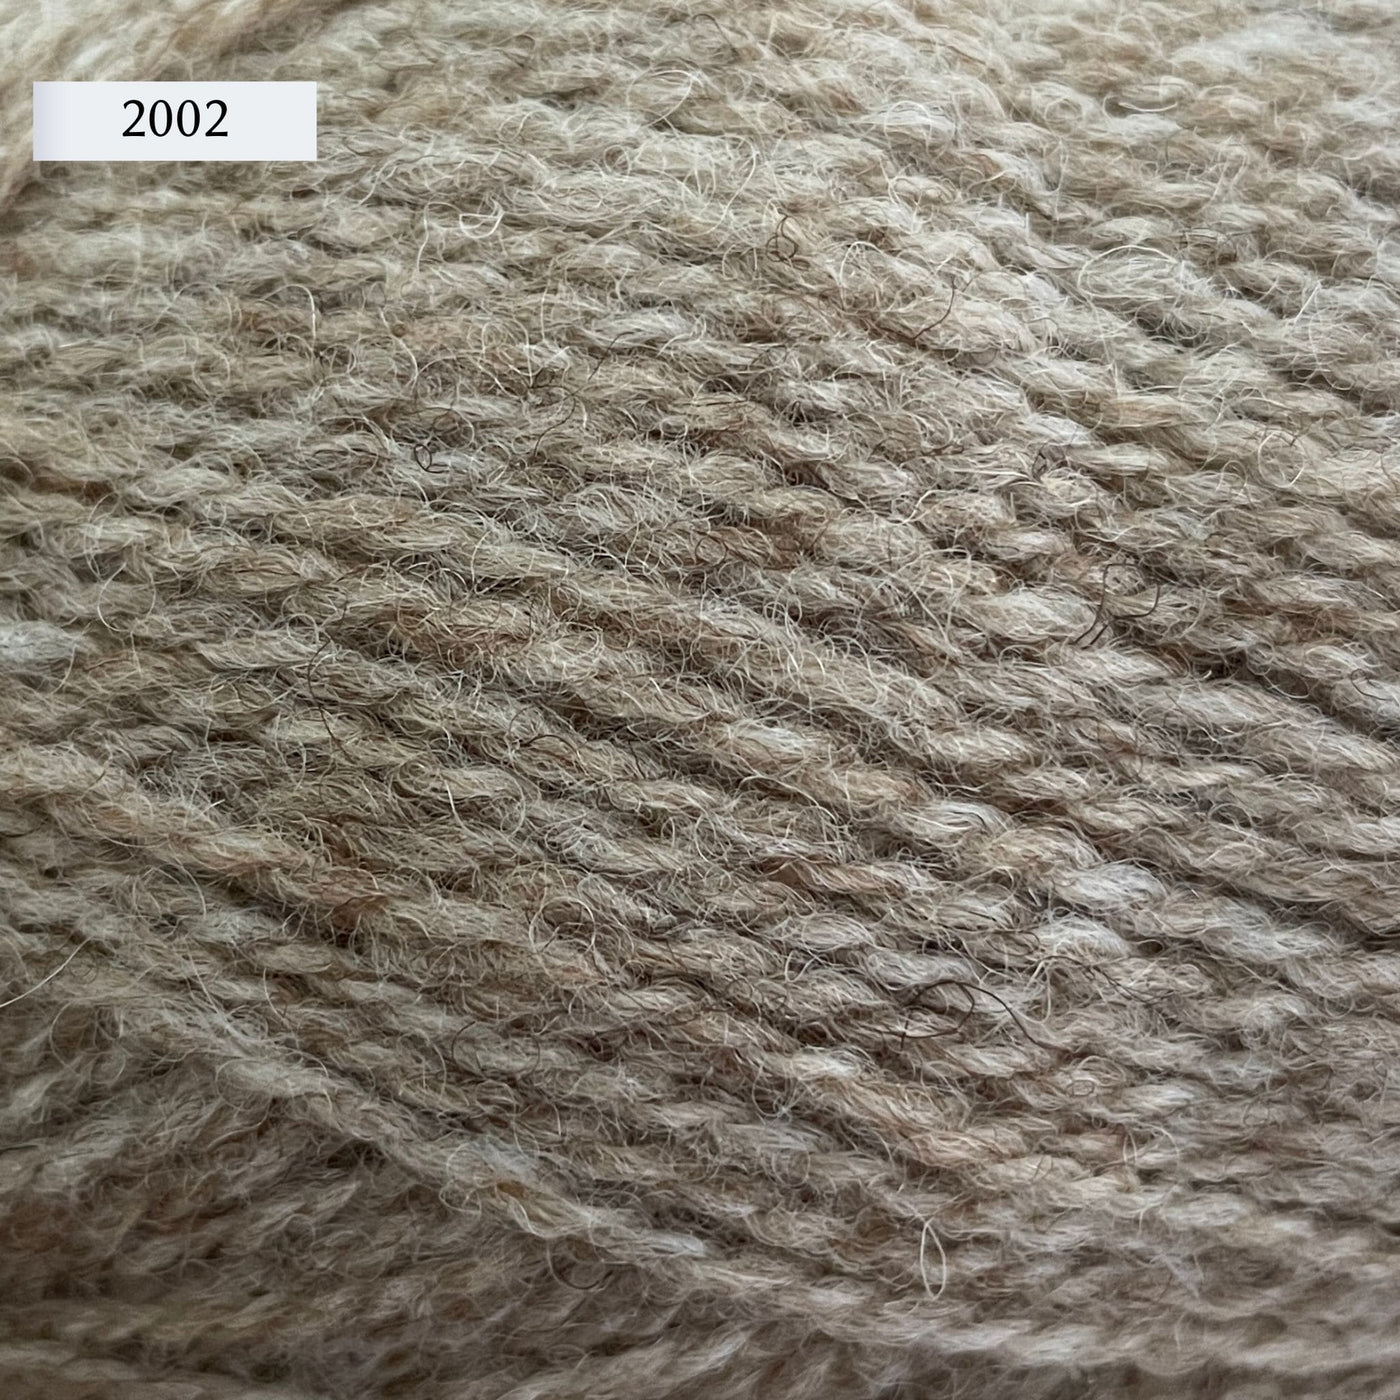 Jamieson & Smith Shetland Supreme, a fingering weight wool yarn, in color 2002, Mooskit, a light tan